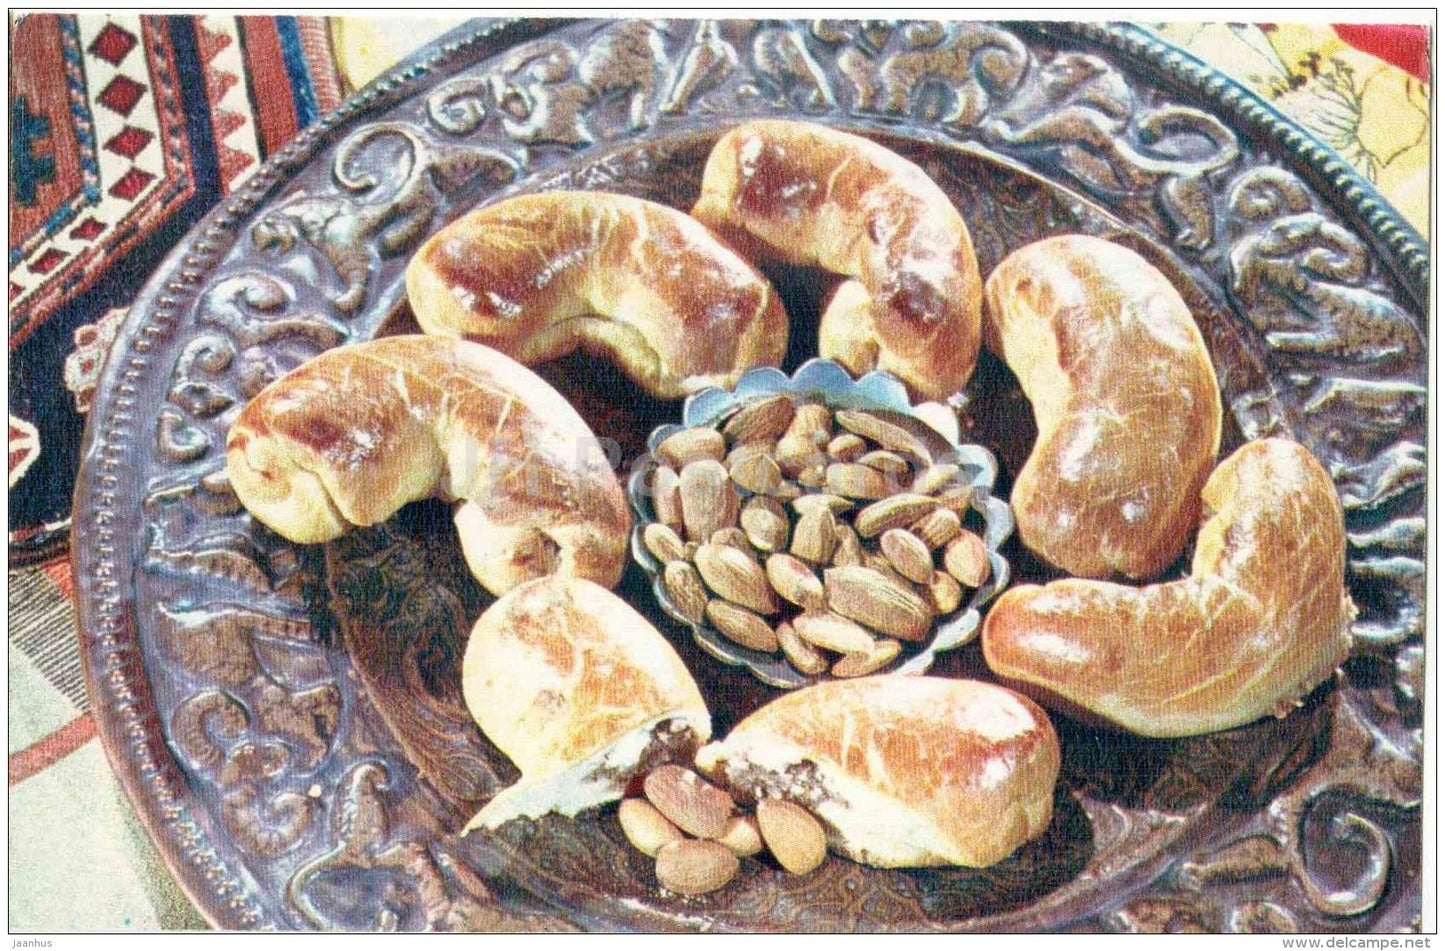 almond rolls - dishes - Azerbaijan dessert - cuisine - 1984 - Russia USSR - unused - JH Postcards